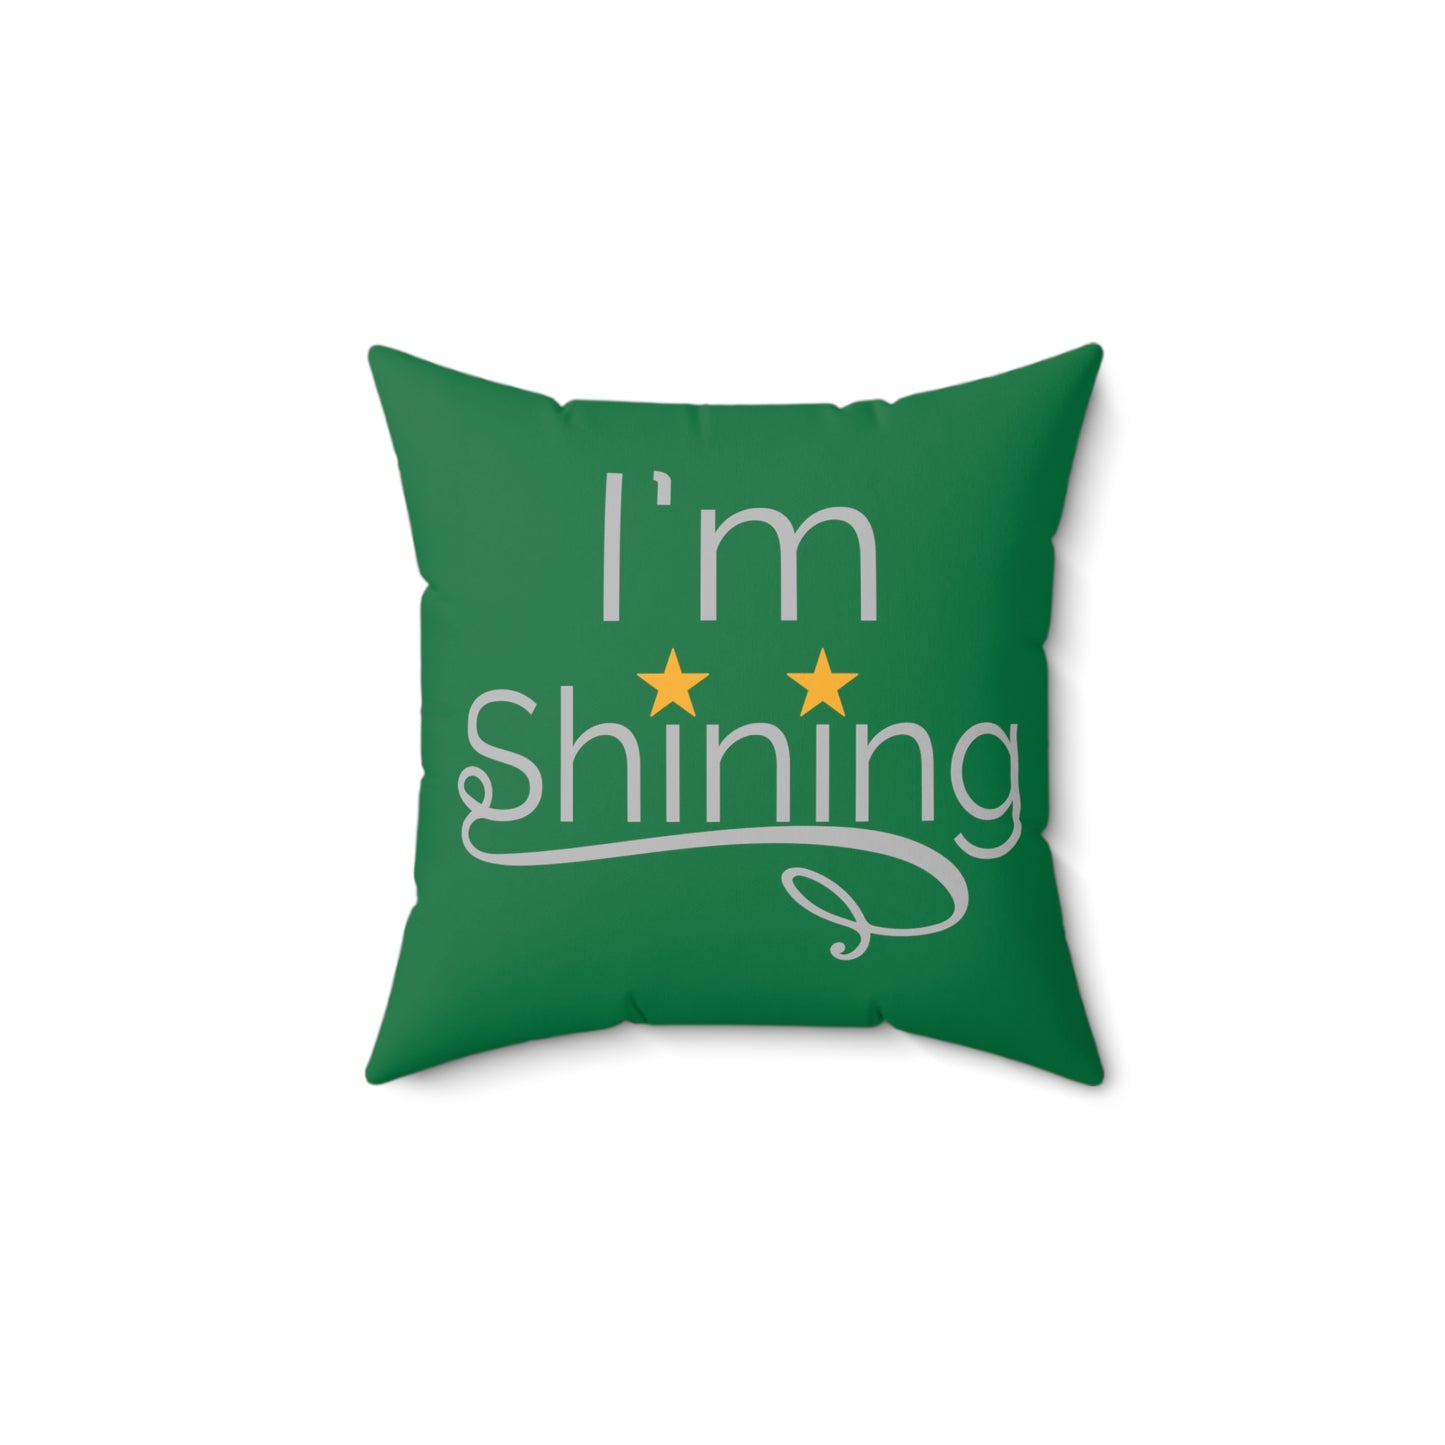 I'm Shining Pillow